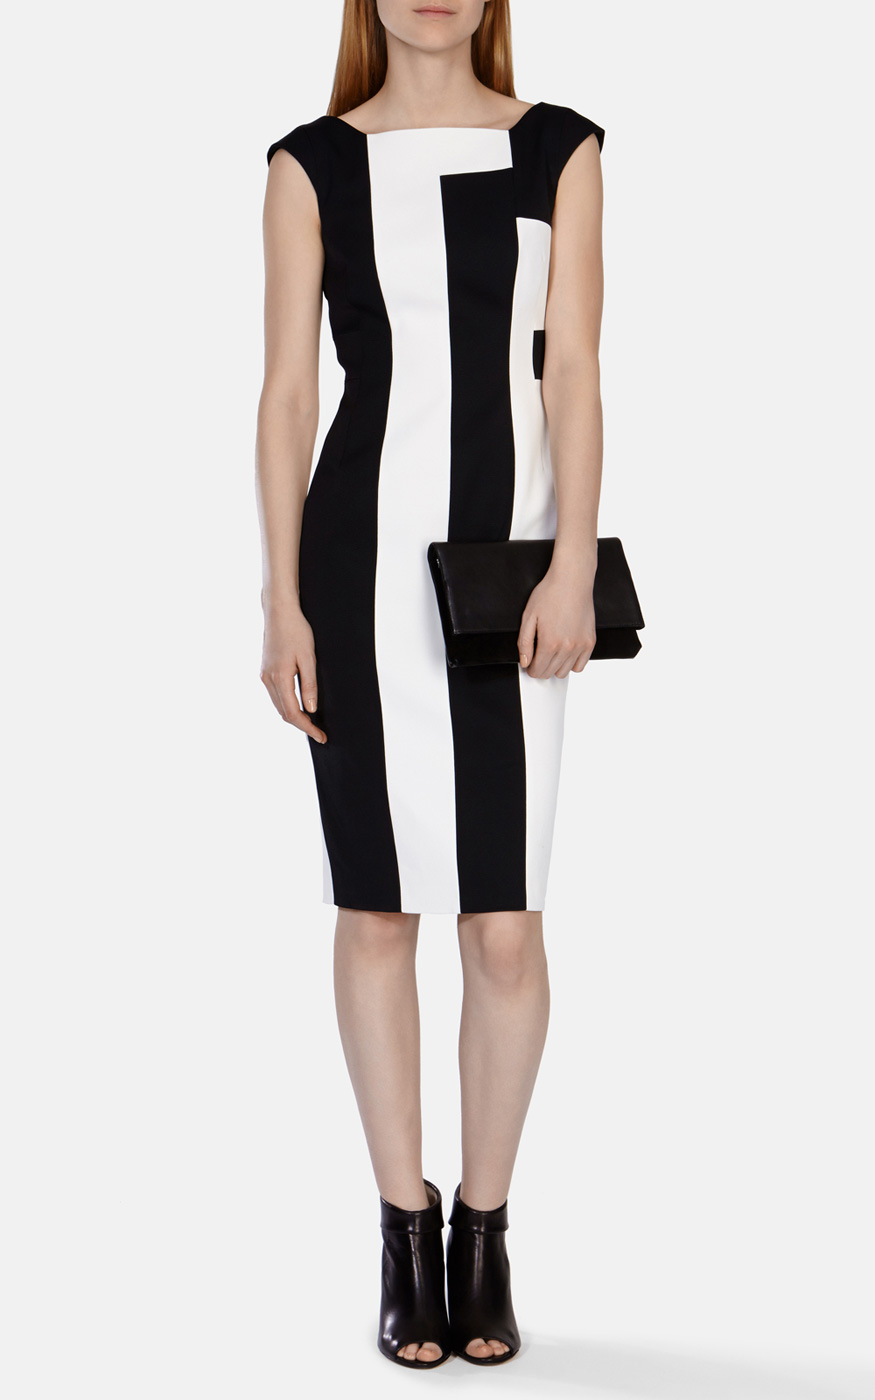 laren-millen-black-and-white-striped-dress